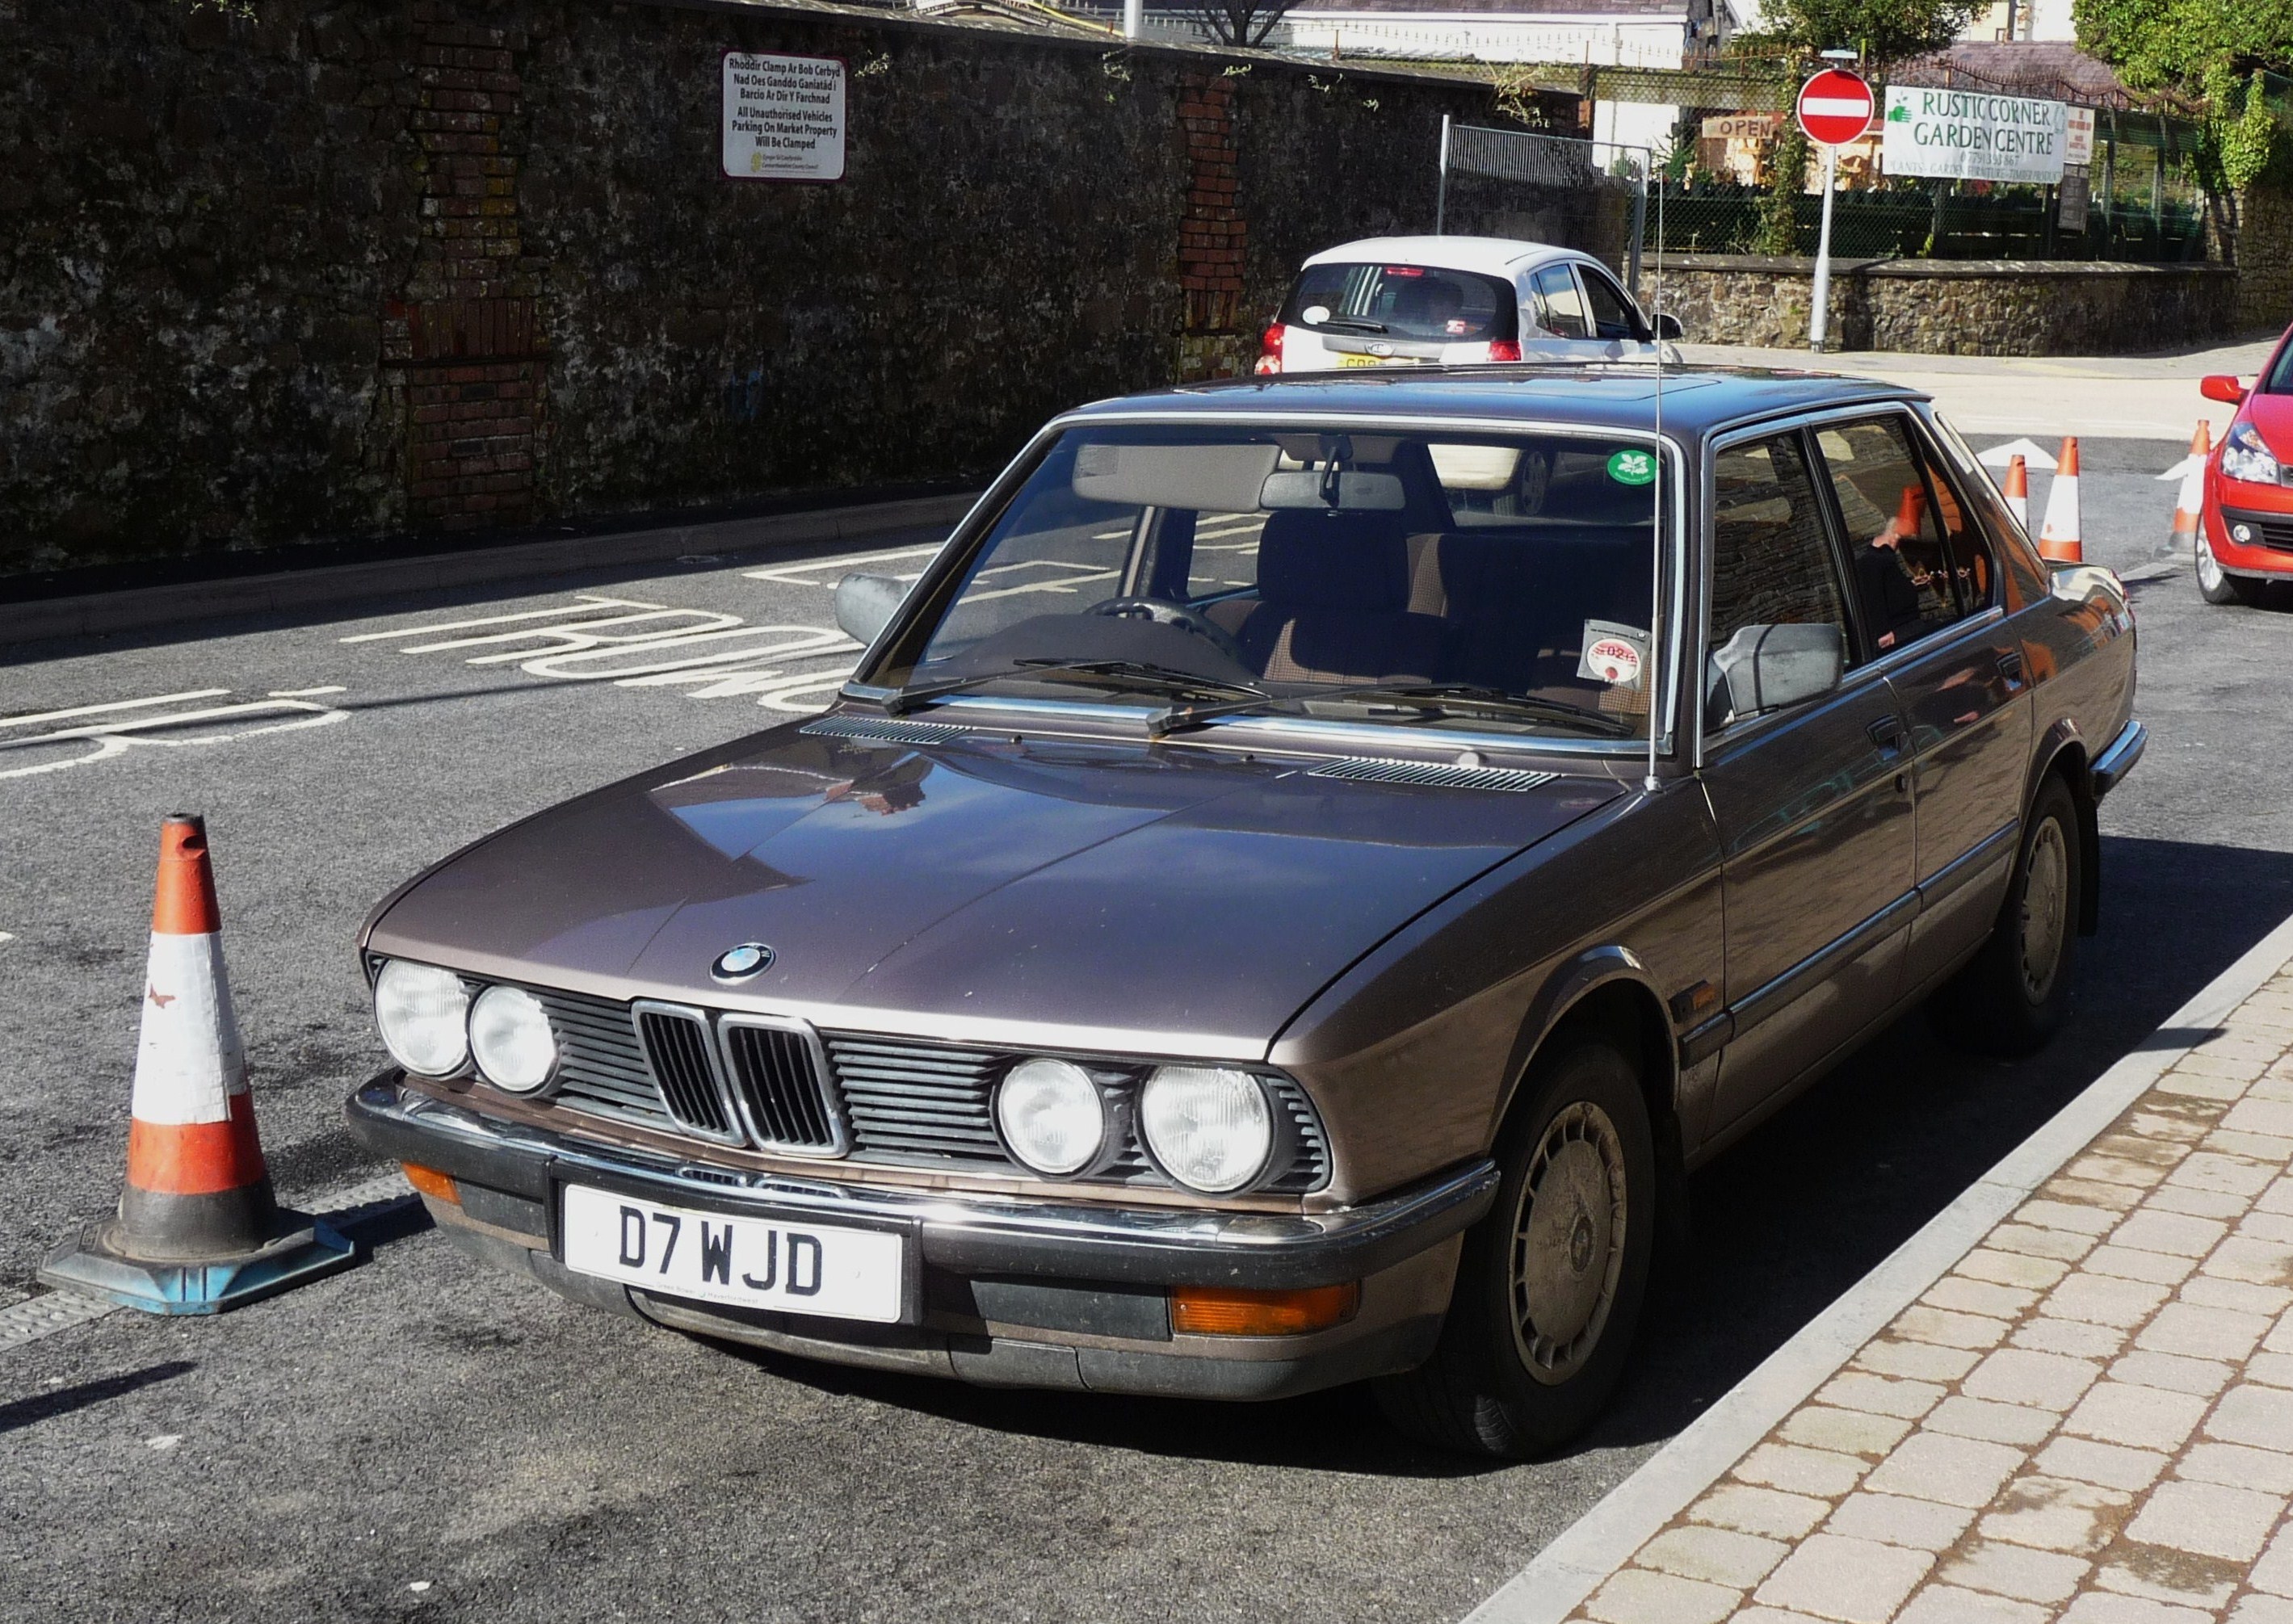 1987 BMW 520i (E28) | Flickr - Photo Sharing!